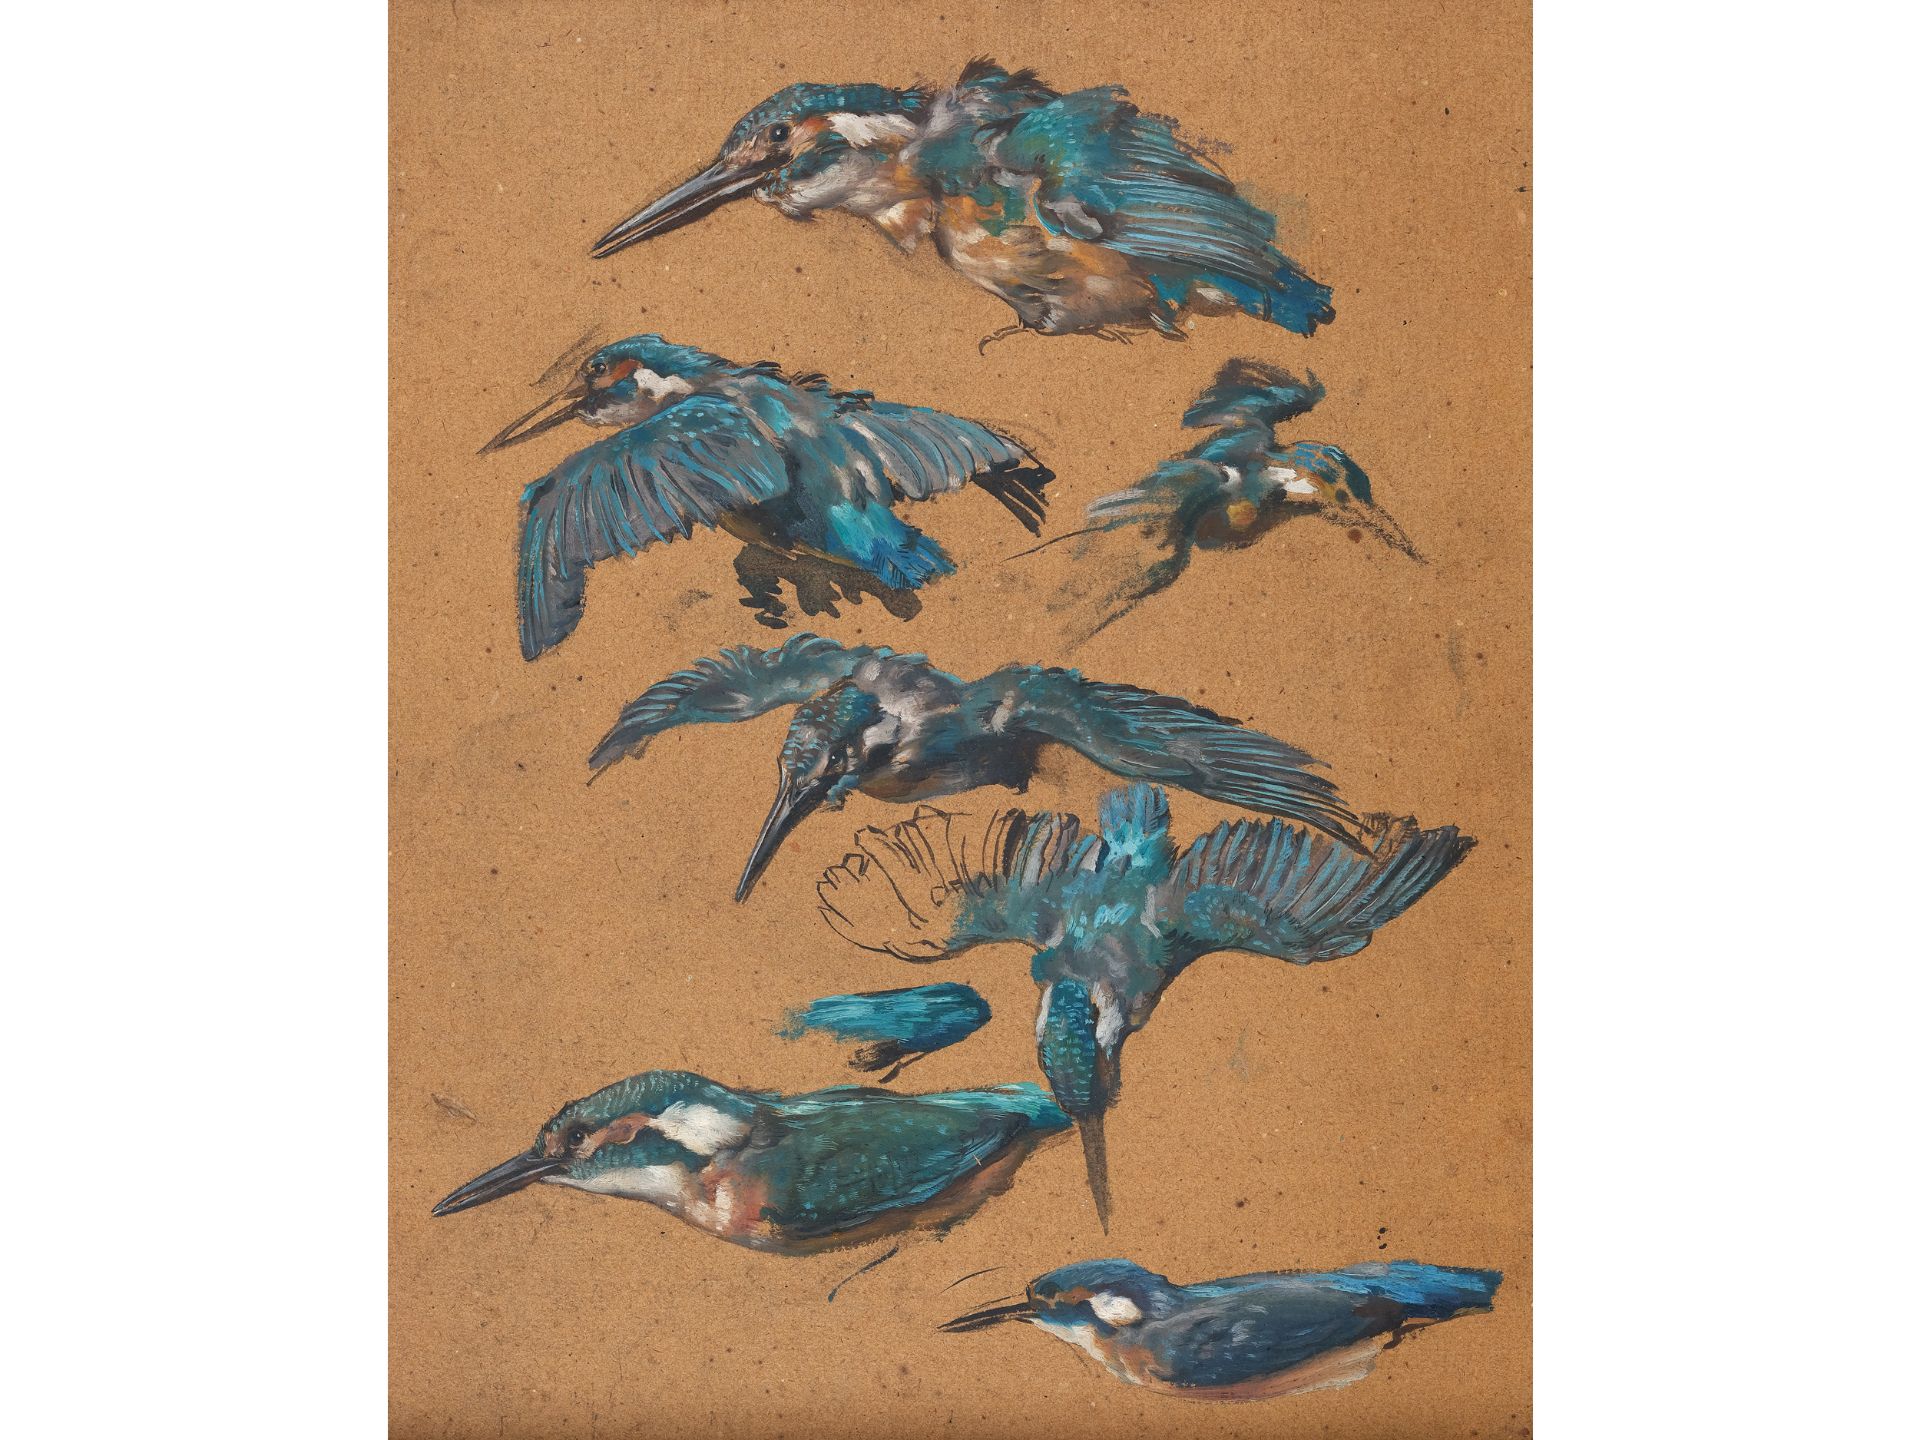 Alexander Pock, Znojmo 1871 - Vienna 1950, Kingfisher studies